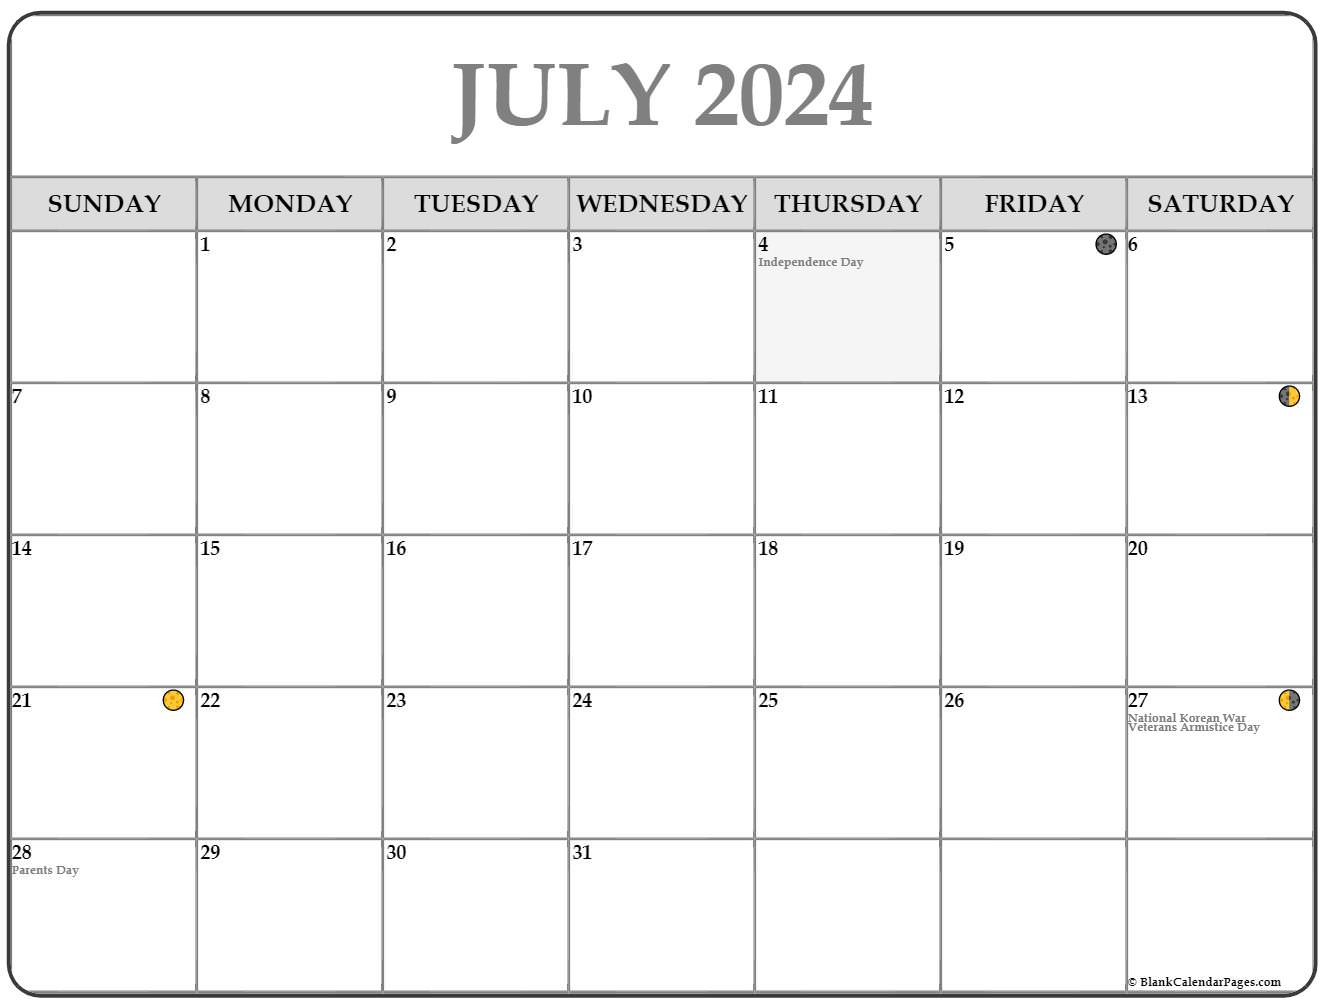 July 2024 Lunar Calendar | Moon Phase Calendar | 2024 July Moon Calendar